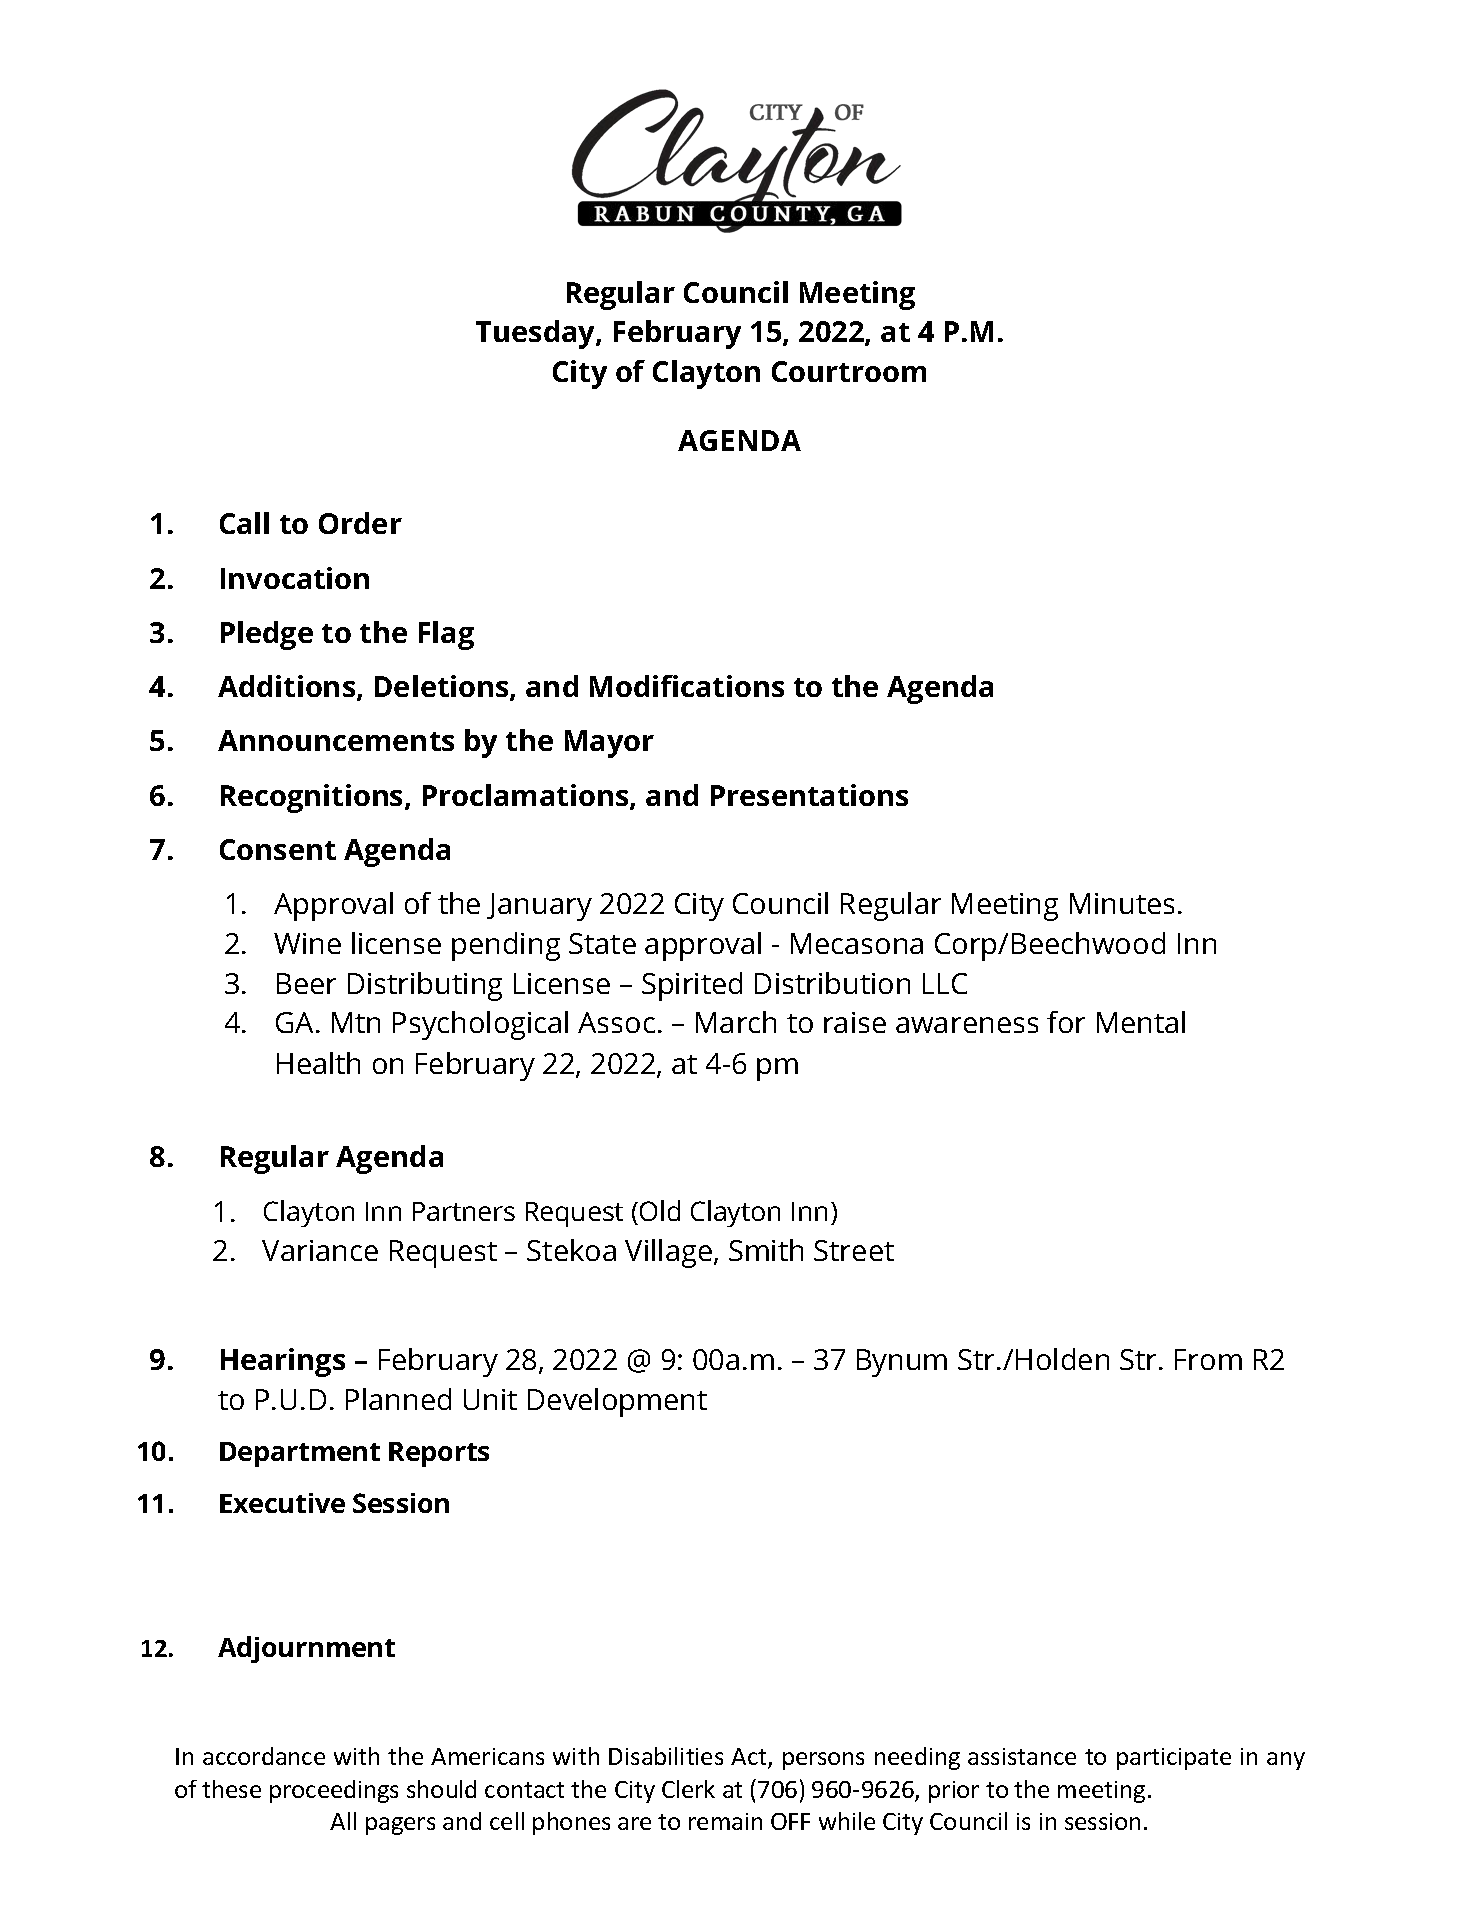 City Council Regular Meeting Agenda 02/15/22